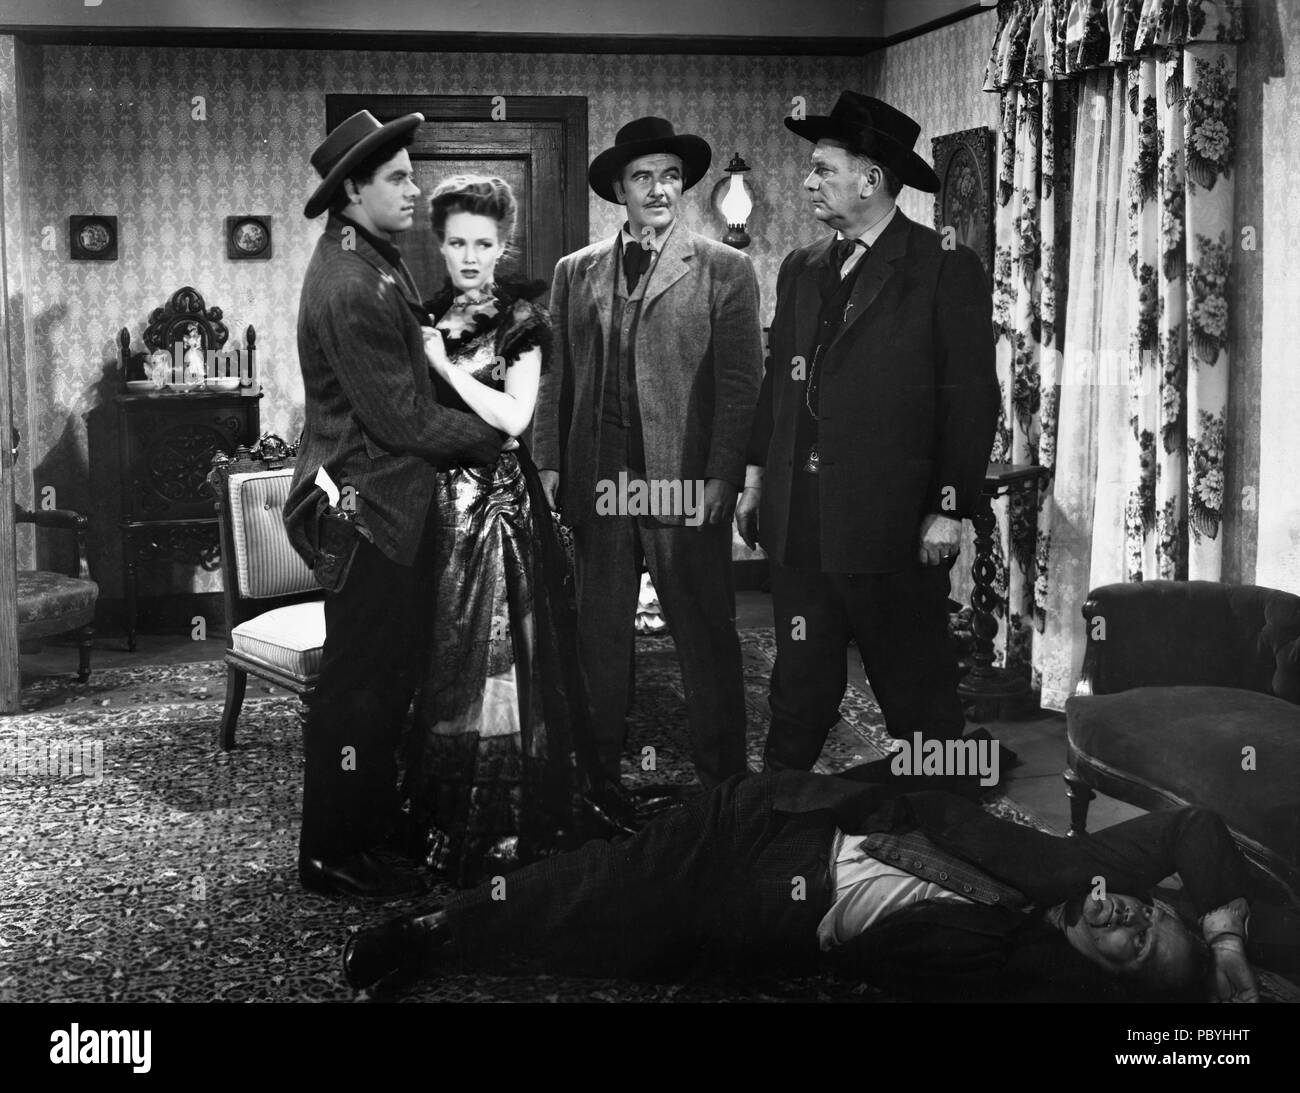 I Shot Jesse James, aka: Ich erschoß Jesse James, USA 1949, Regie: Samuel Fuller, Darsteller (v. l.): John Irlanda, Barbara Britton, Preston Foster, Tom Noonan Foto Stock